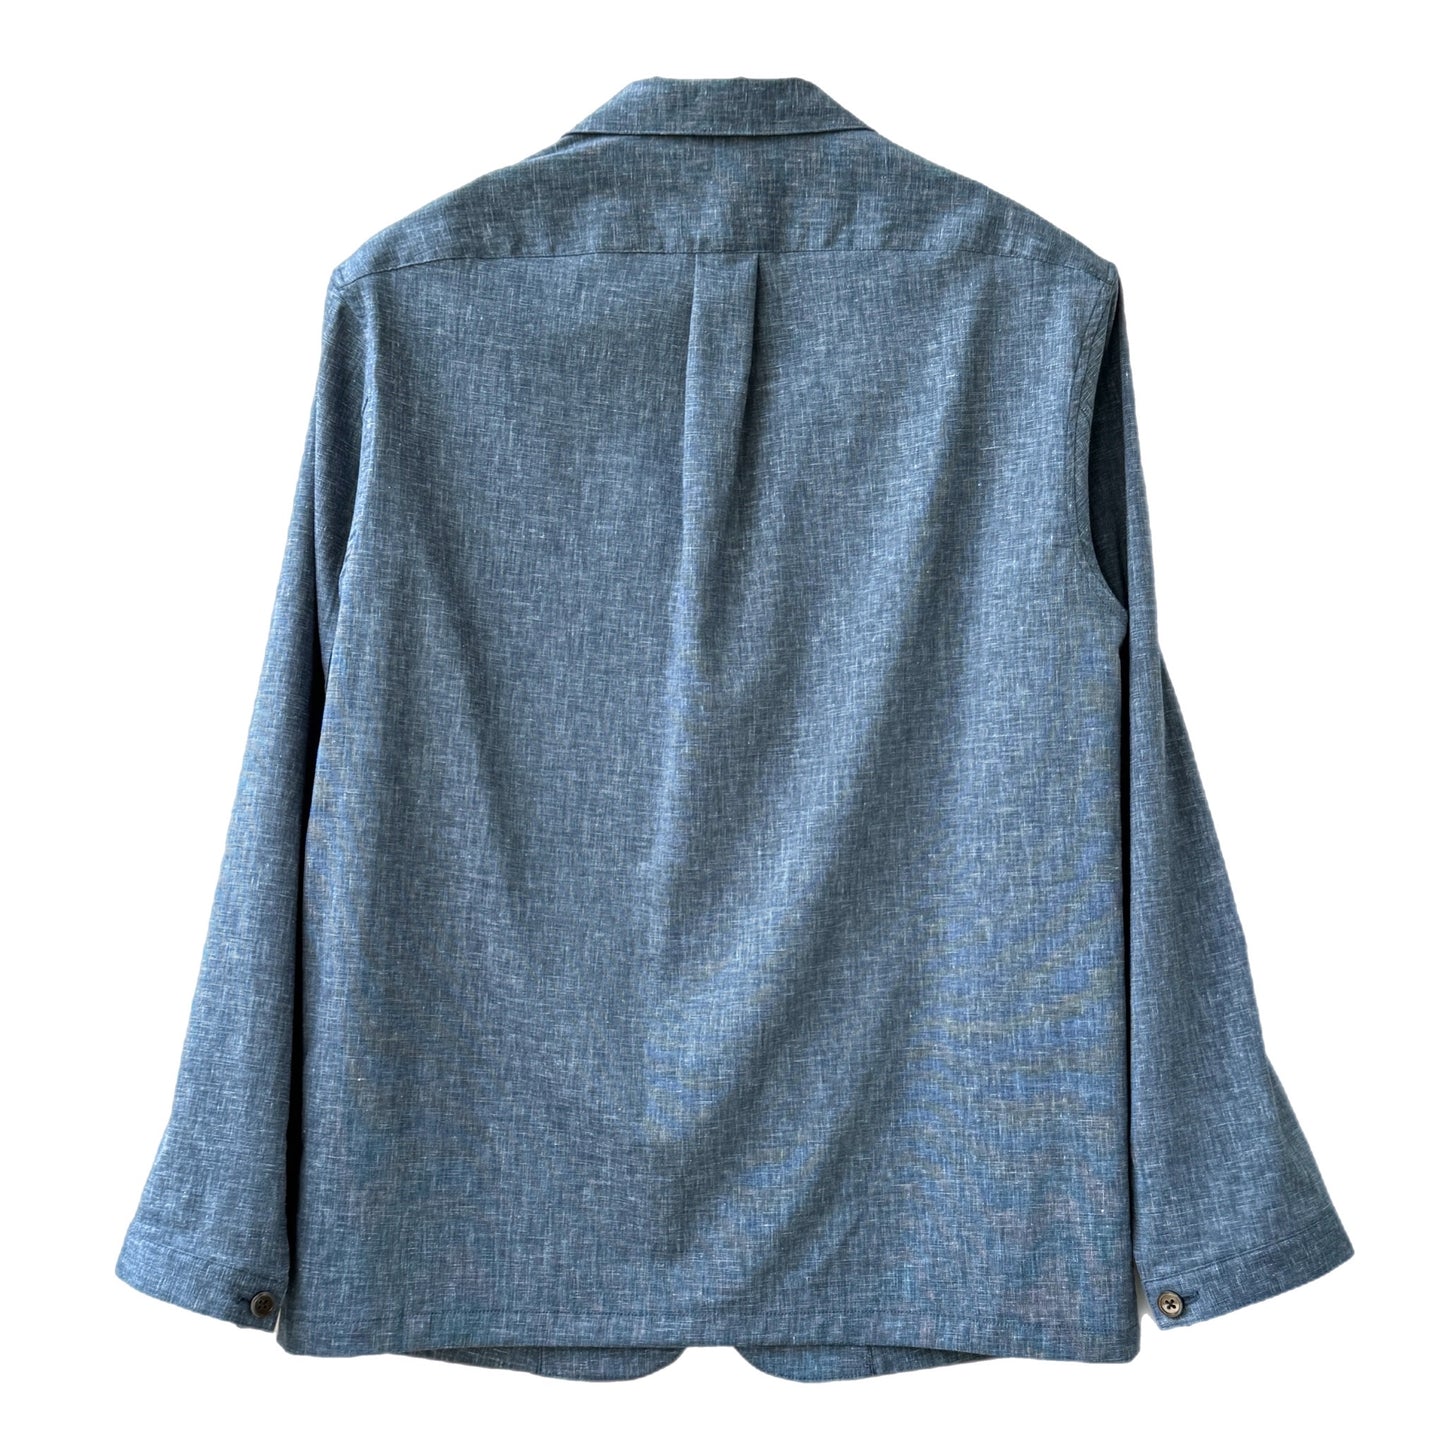 COLONY CLOTHING /  メランジカラー シャツジャケット / CC2401-JK01S-03